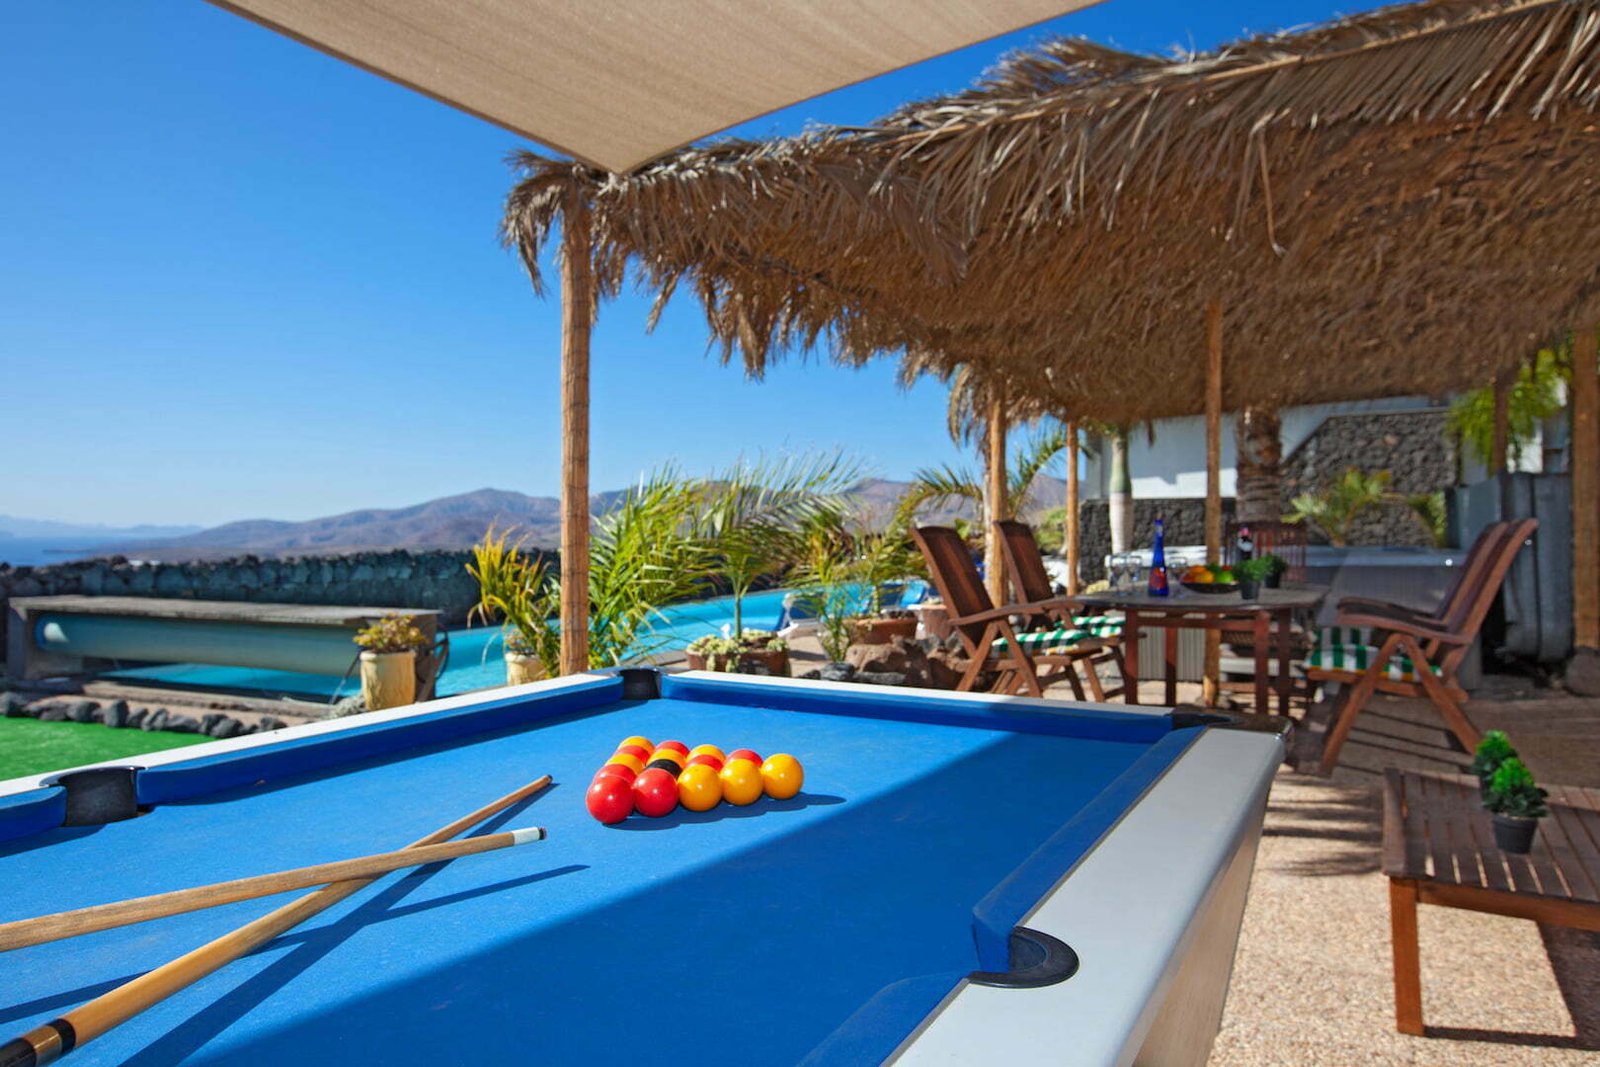 Villa Paraiso - Shaded Terrace Area - American Pool Table